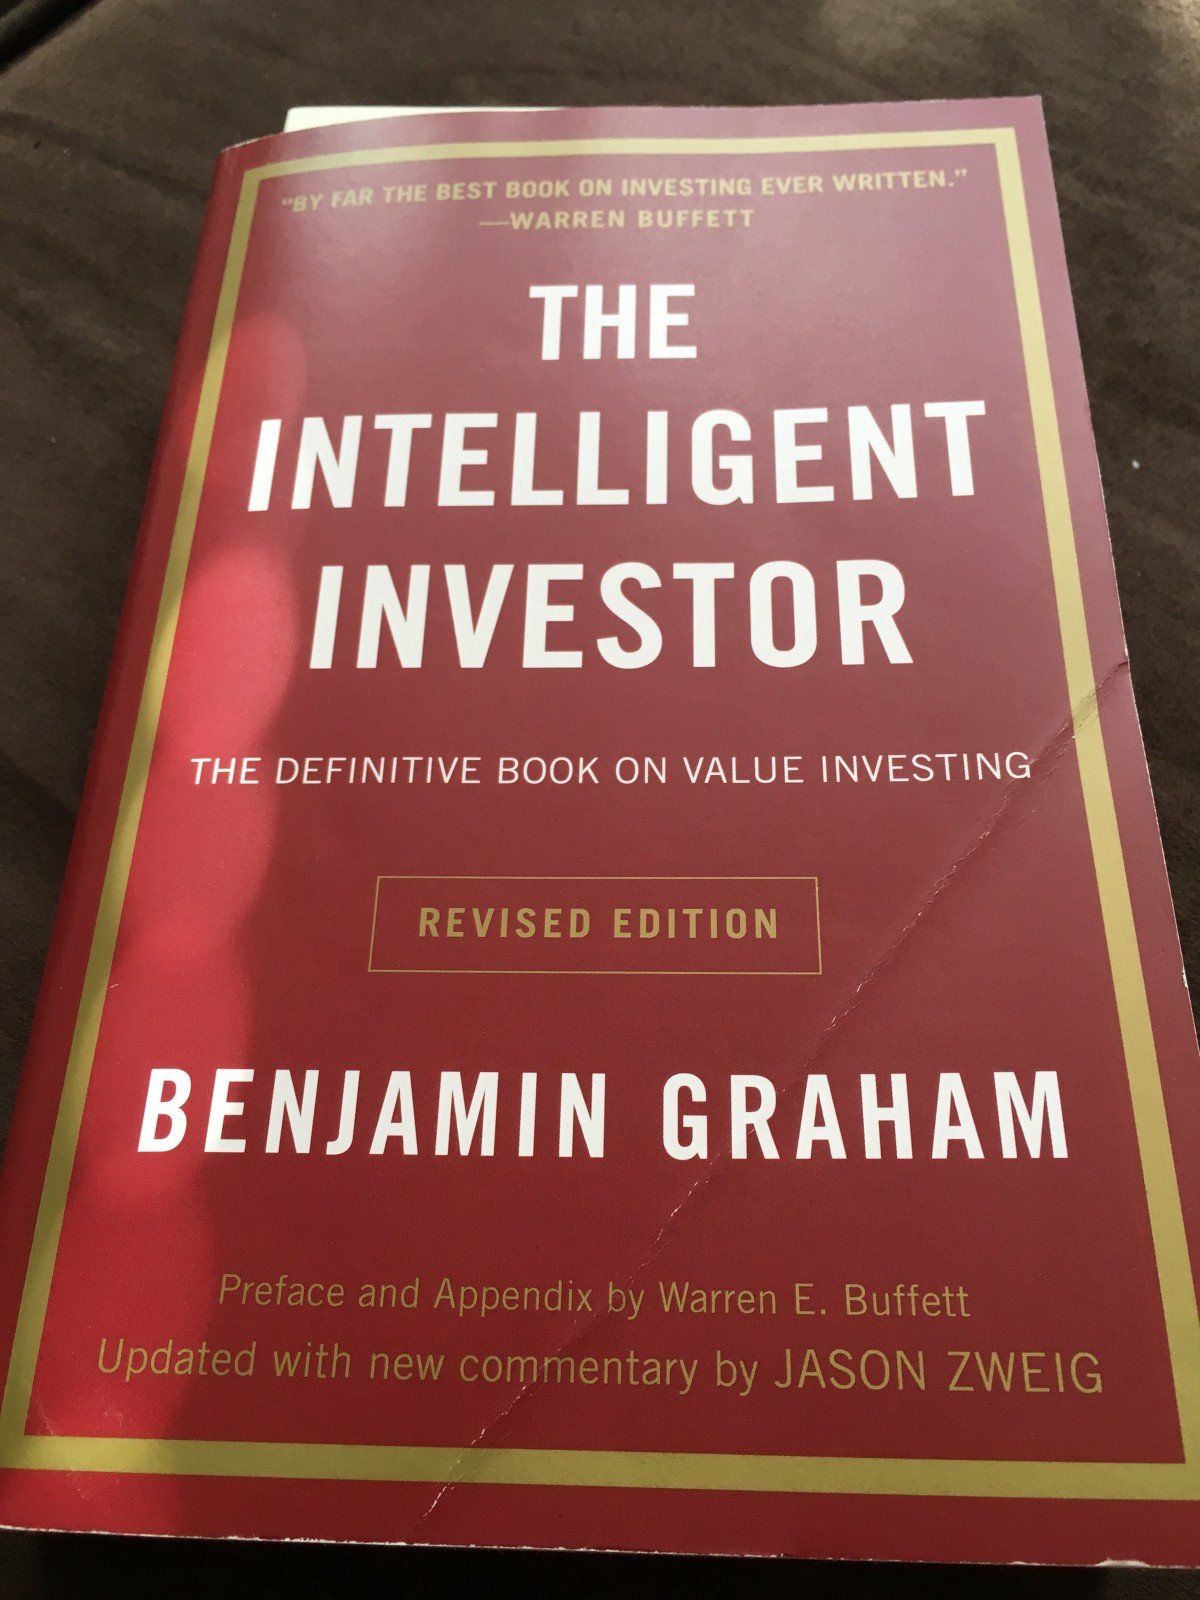 Ảnh bìa cuốn sách The intelligent investor (ảnh: internet).